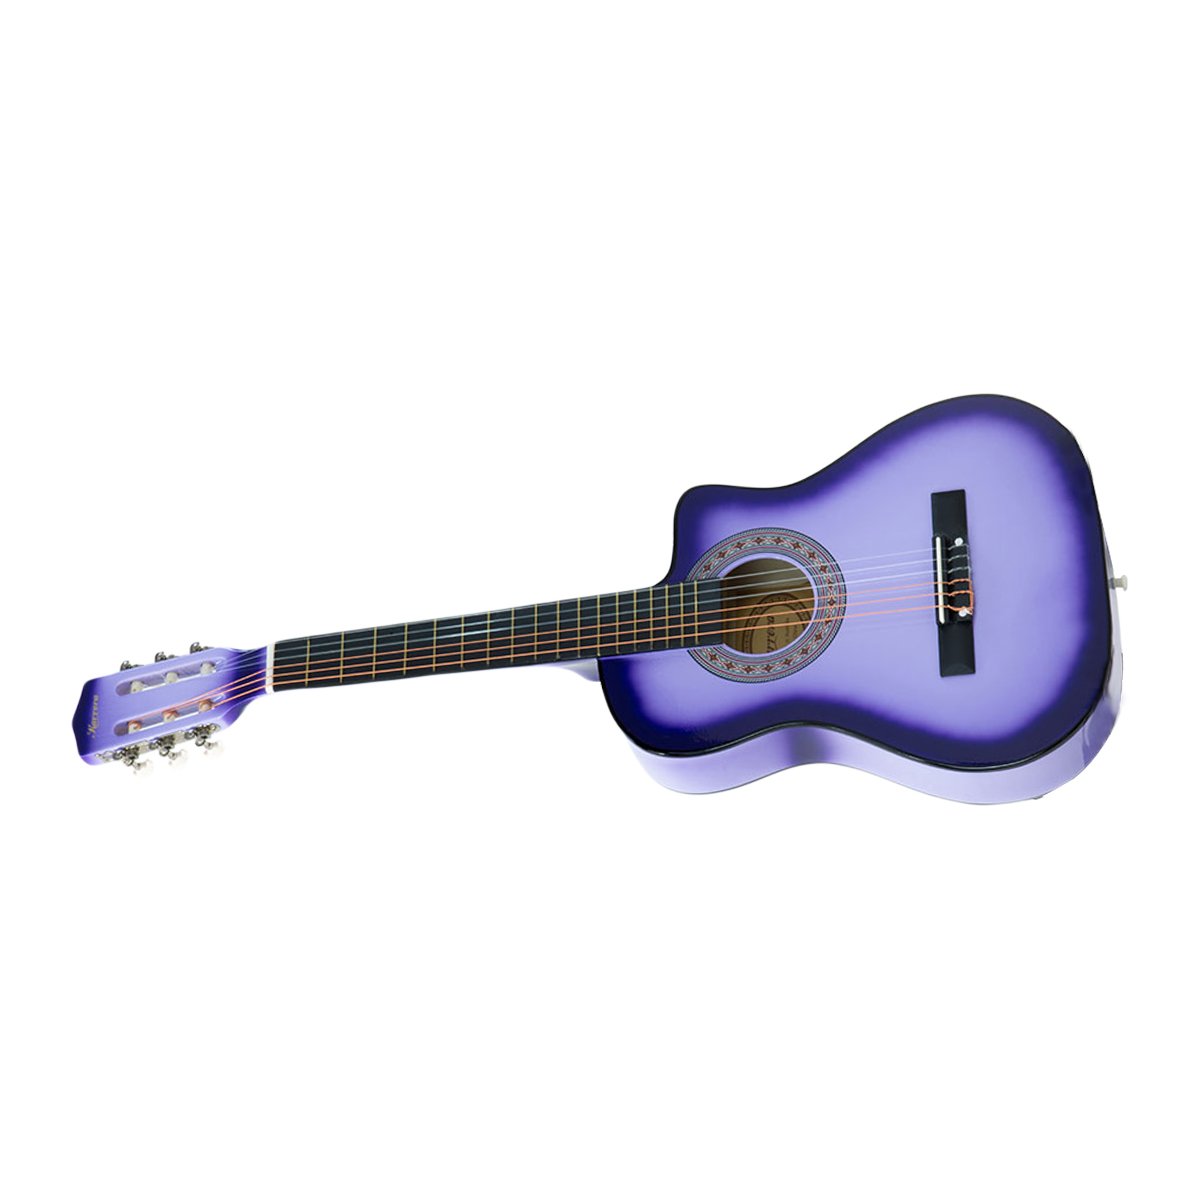 Karrera 38in Cutaway Acoustic Guitar with guitar bag - Purple Burst - SILBERSHELL